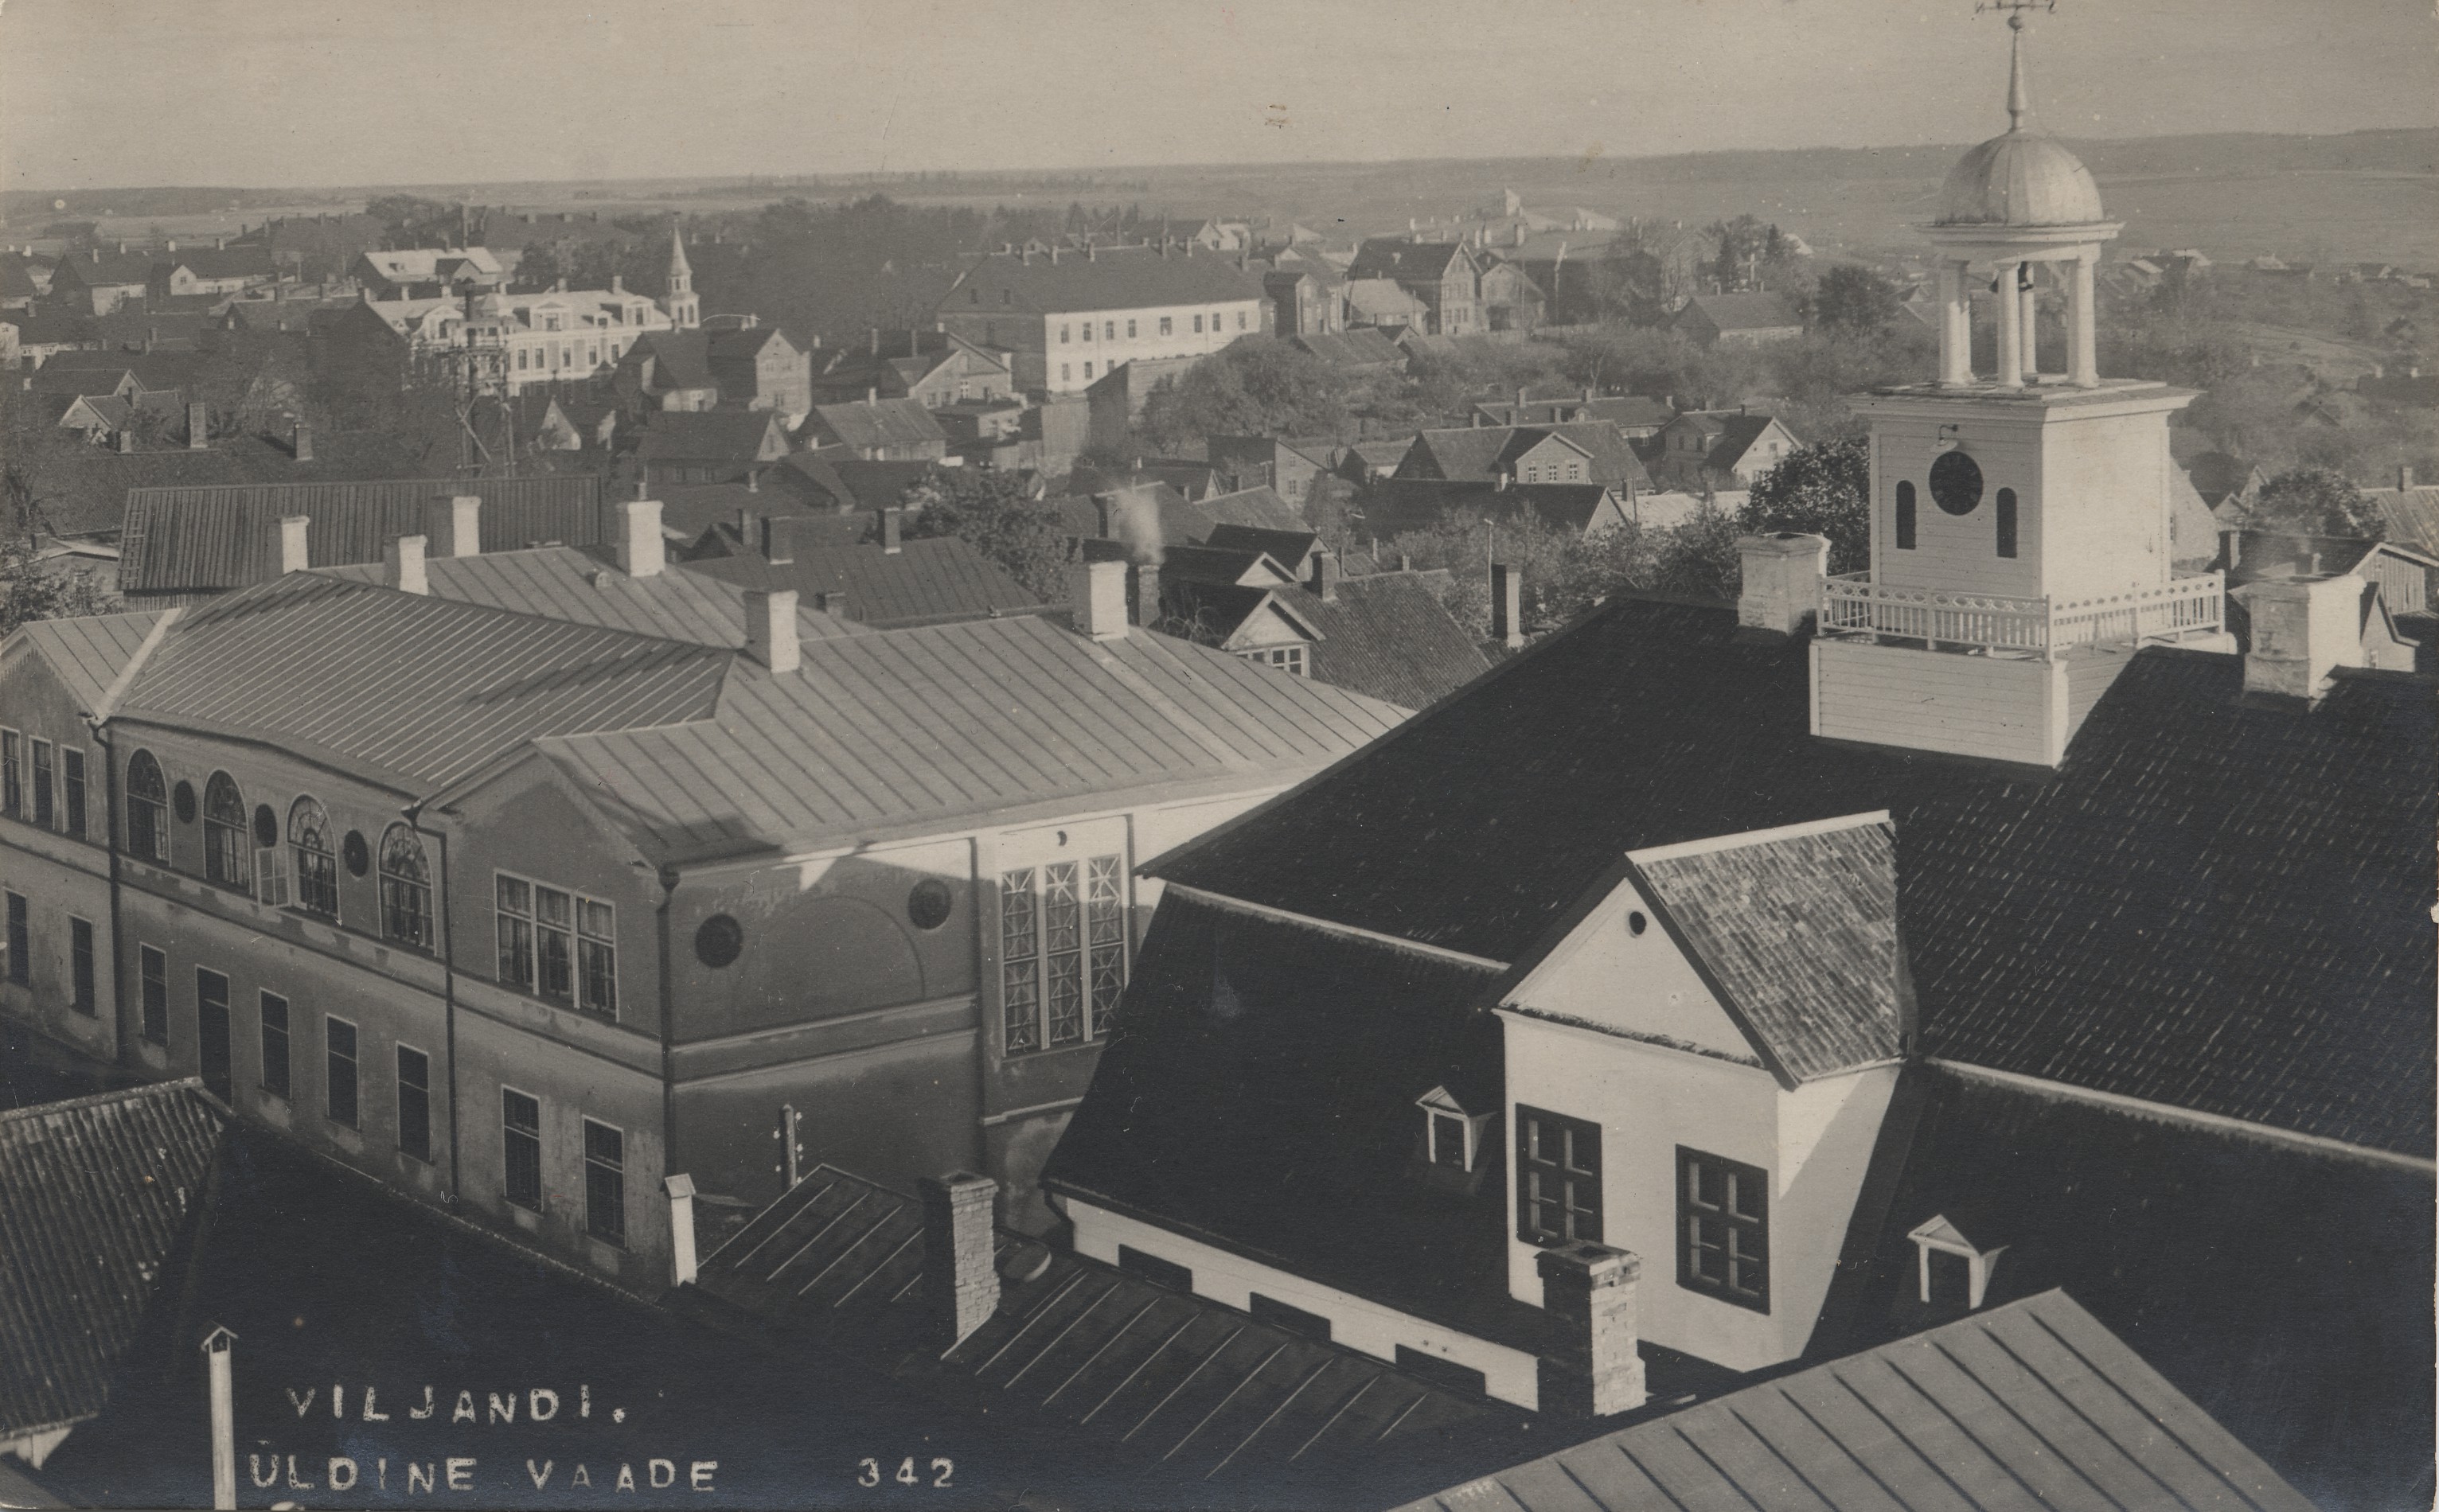 General view of Viljandi